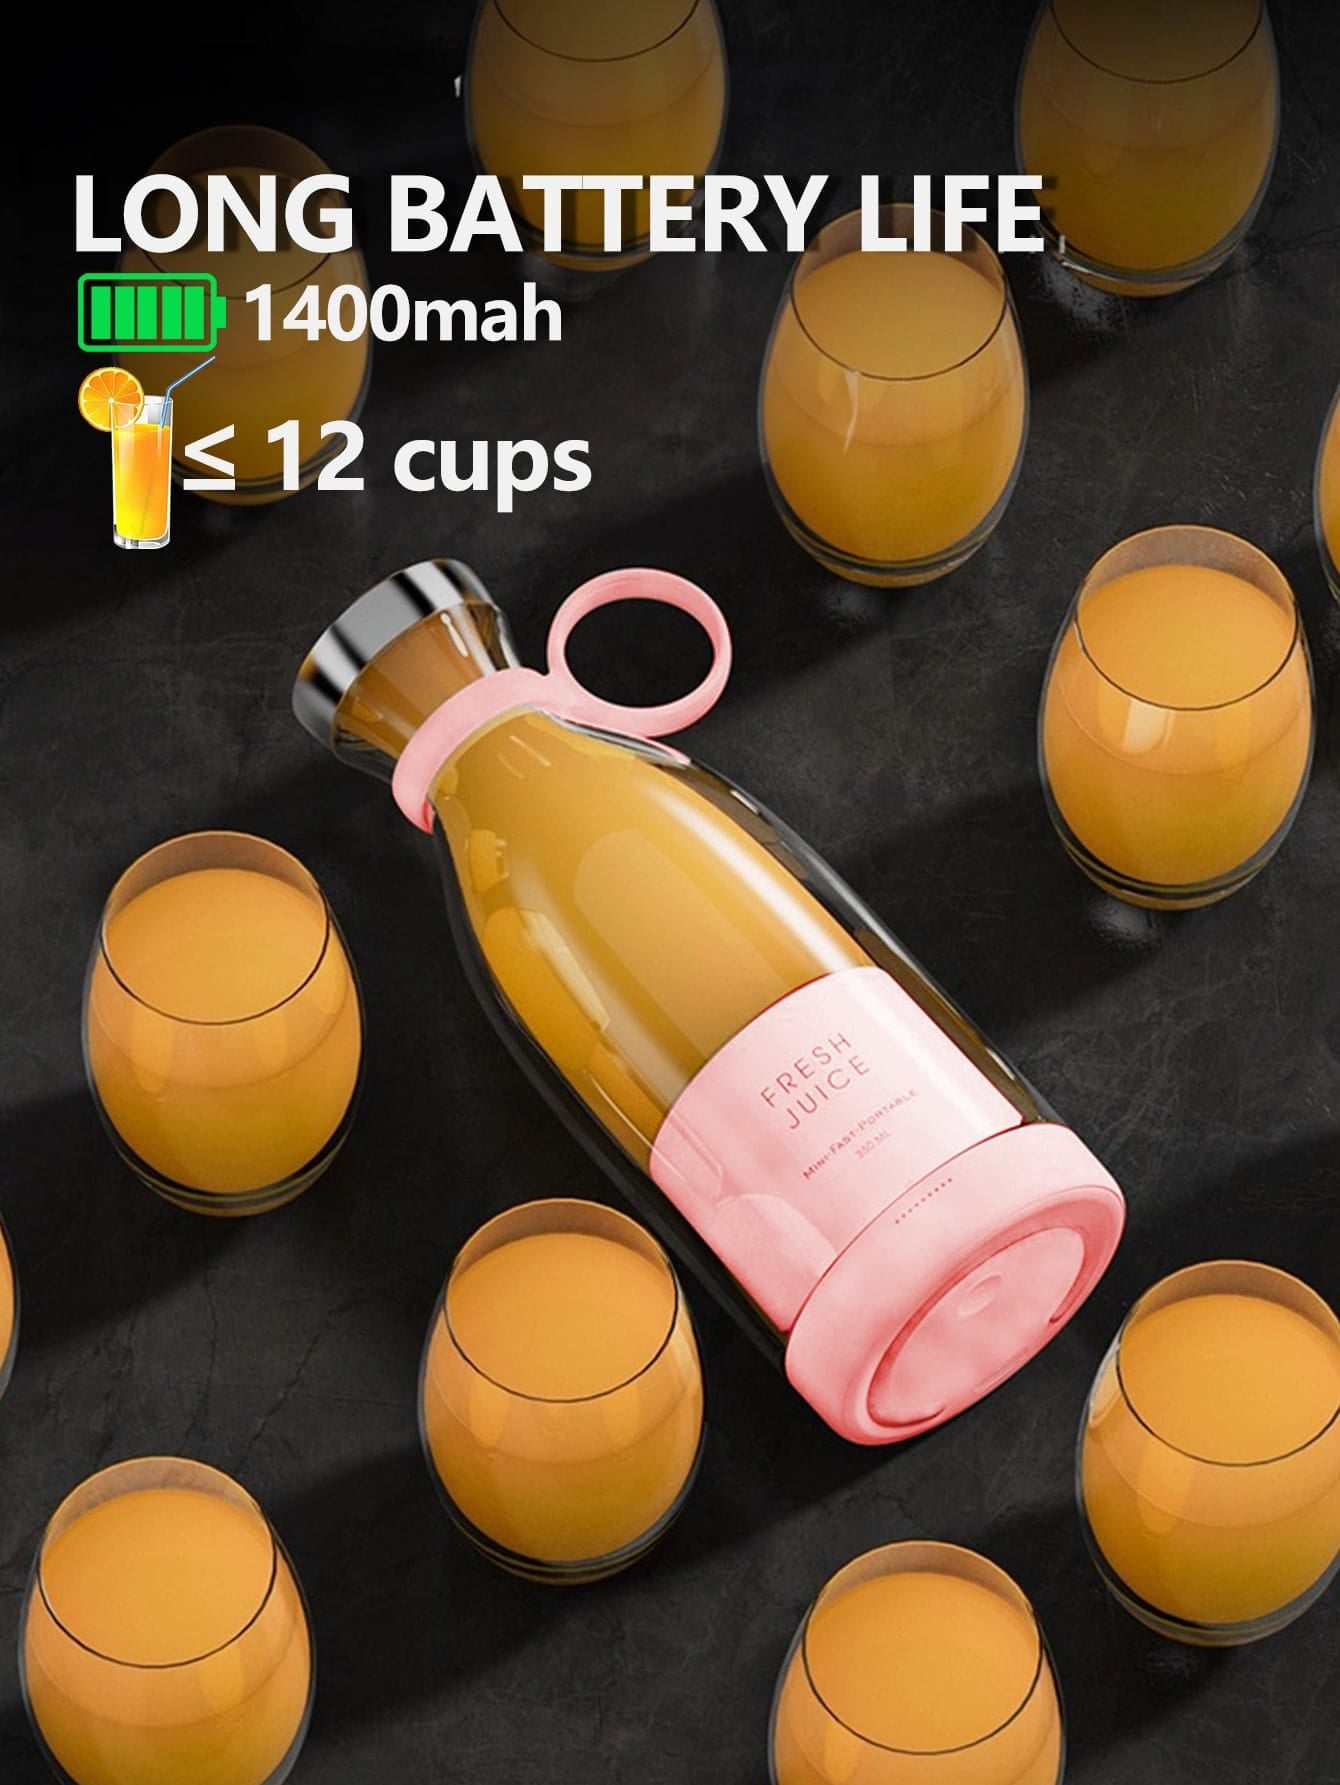 Fresh Juice Portable Blender 